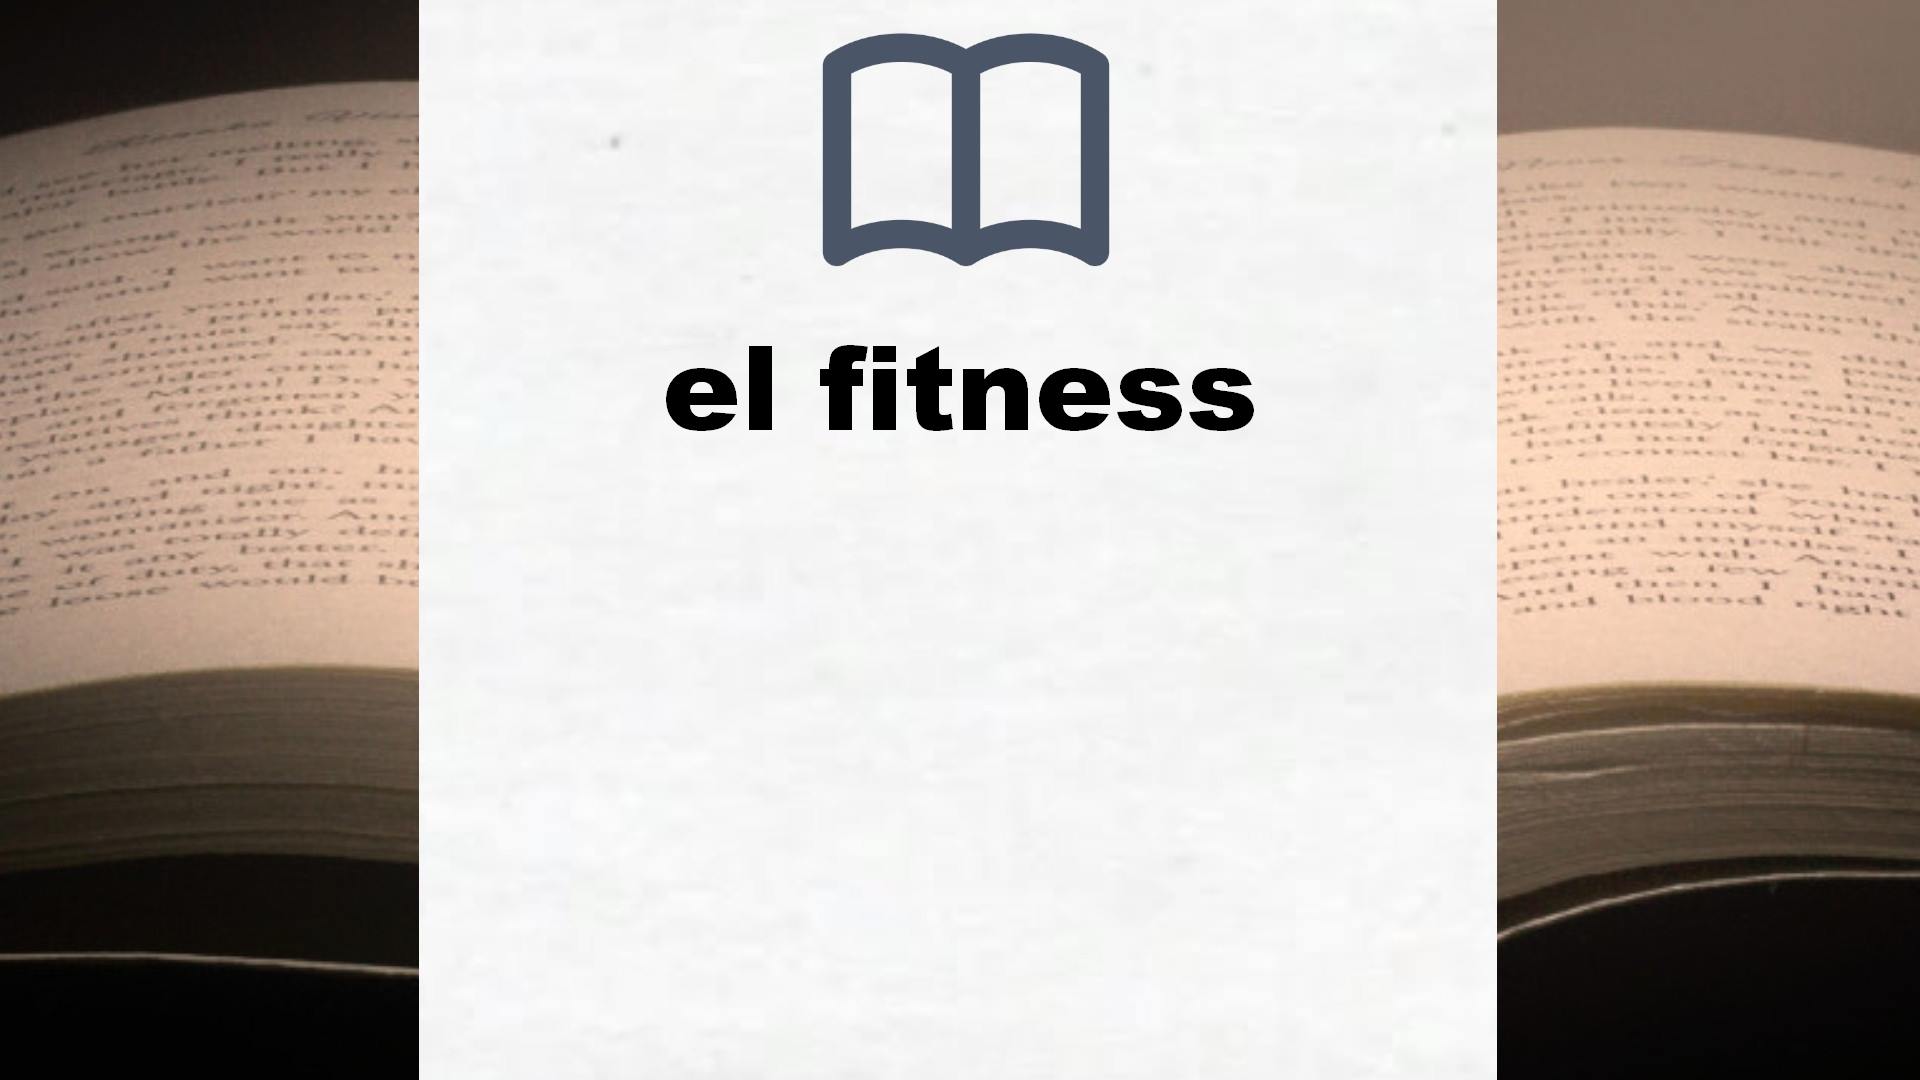 Libros sobre el fitness